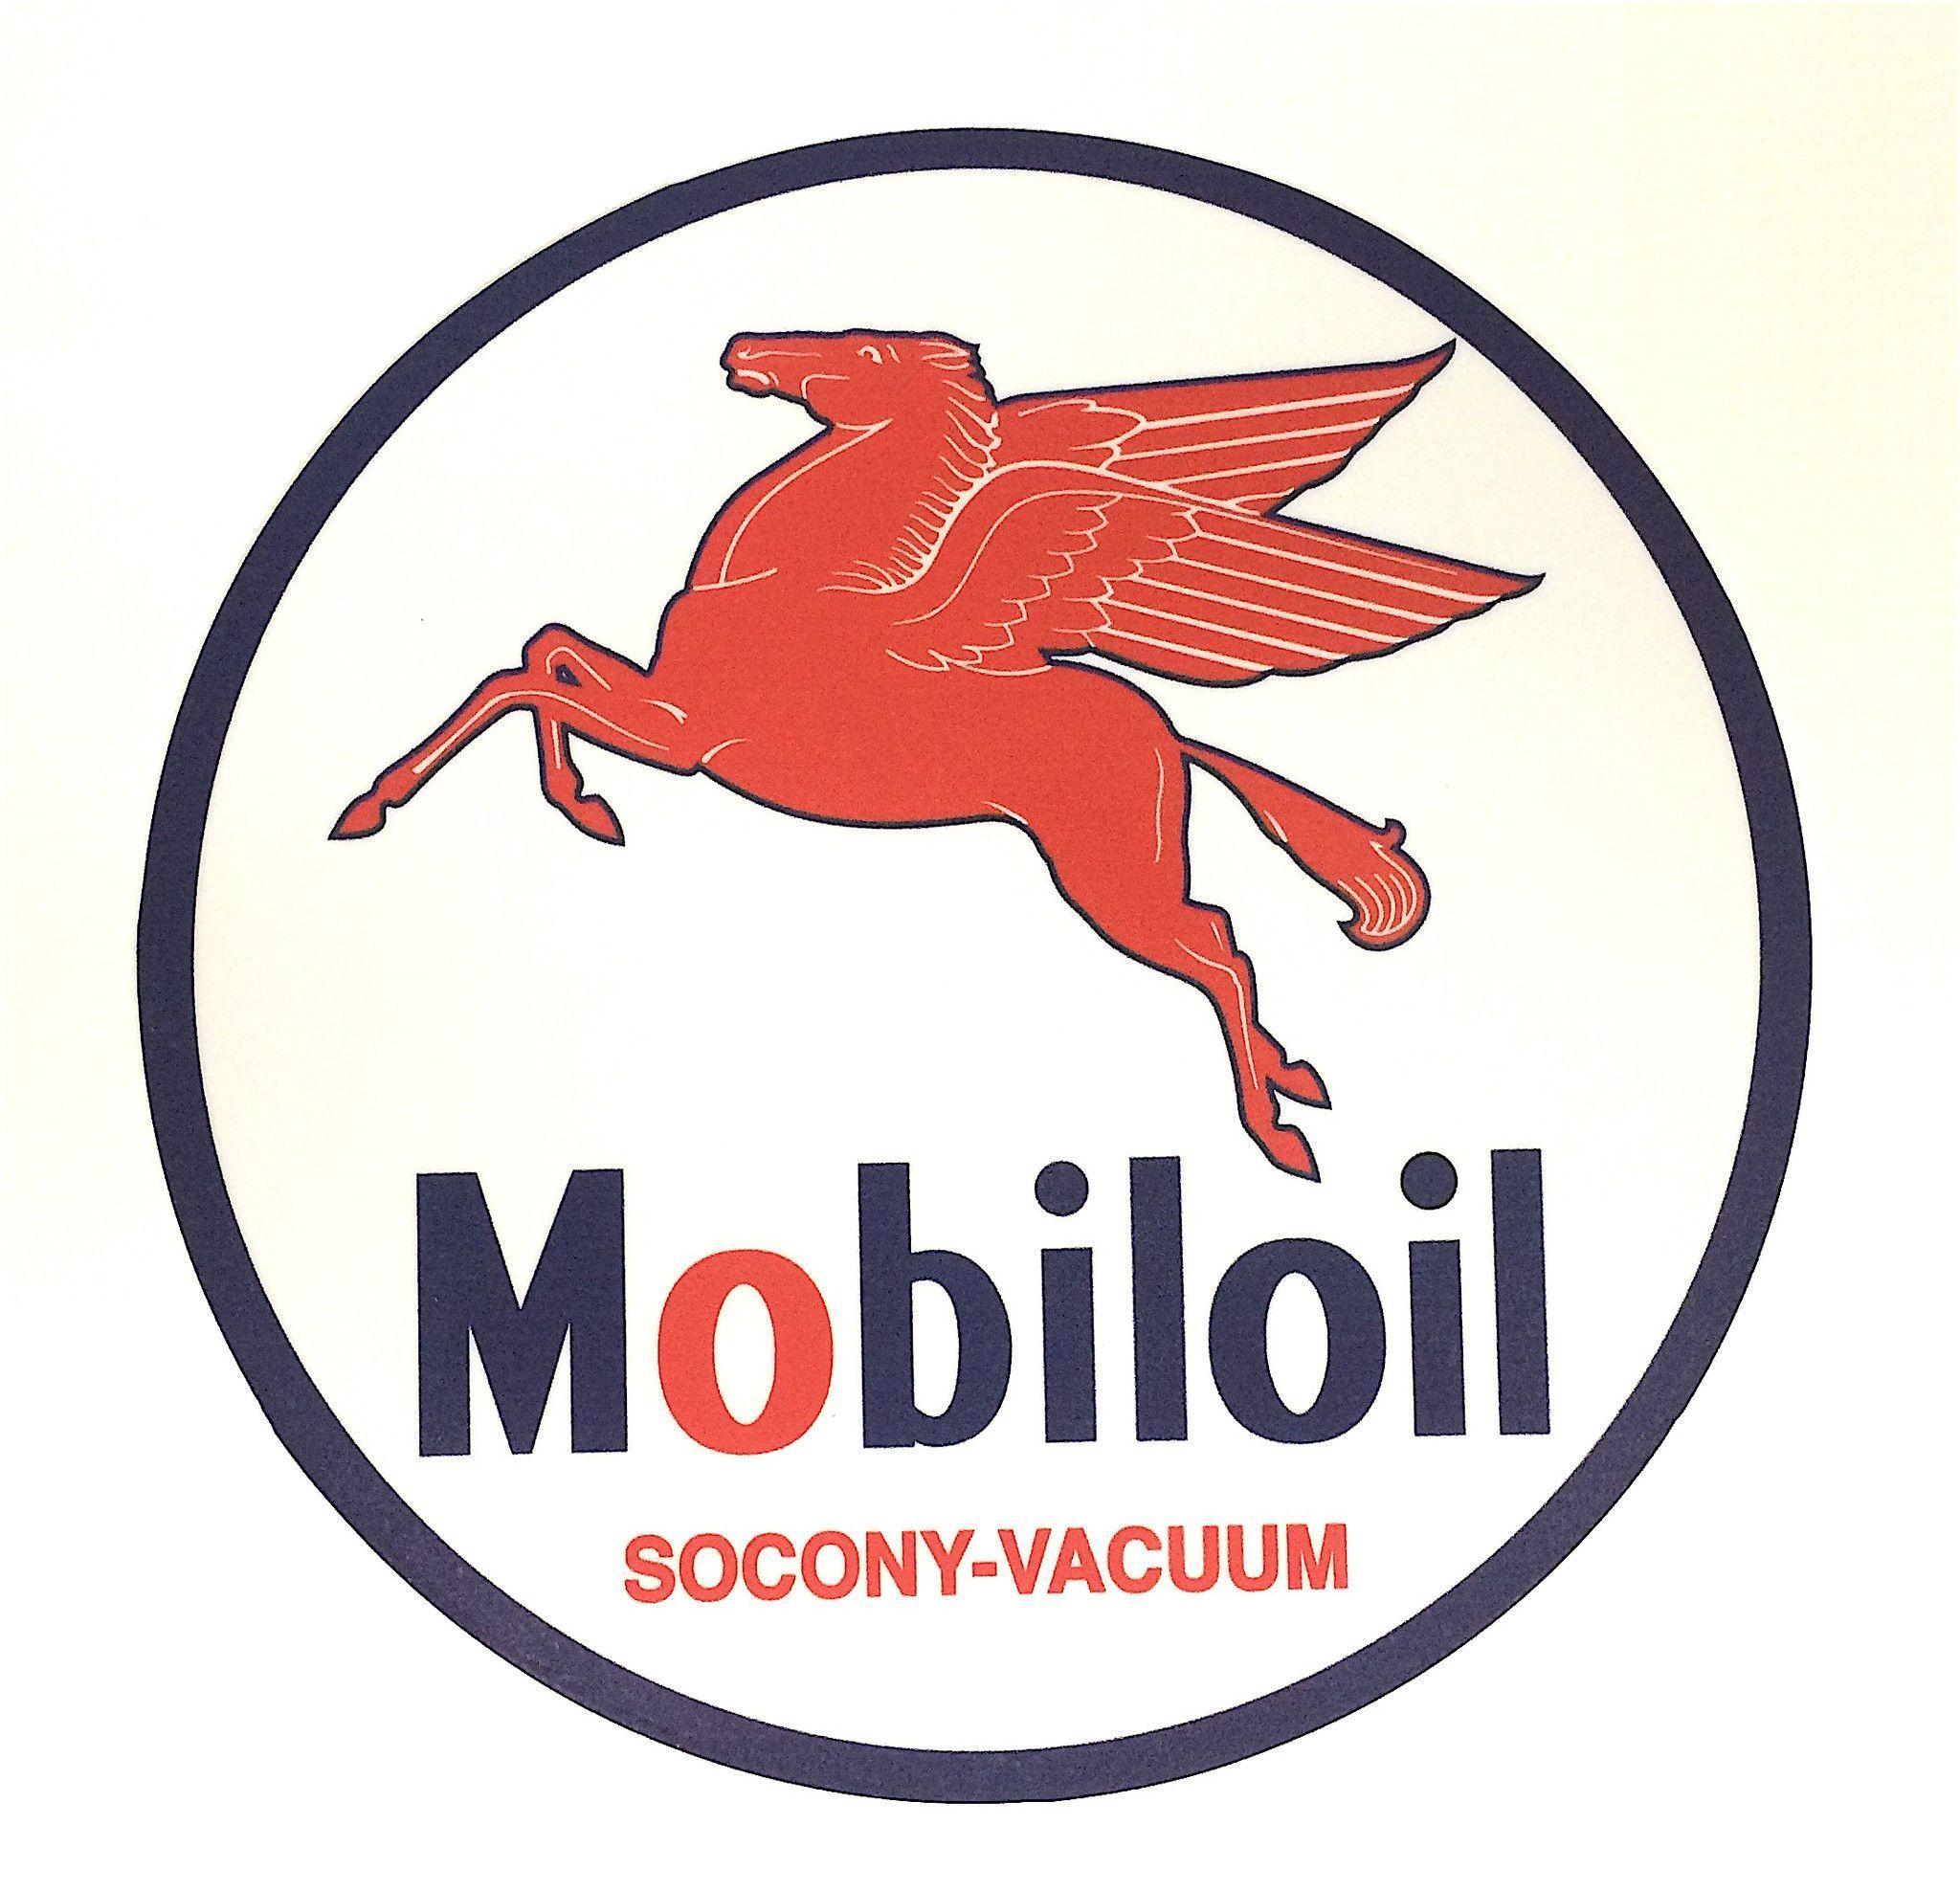 Old Mobil Oil Logo - Mobiloil 7 Pegasus Tin. Mobil Oil, days of yesterday. Metal